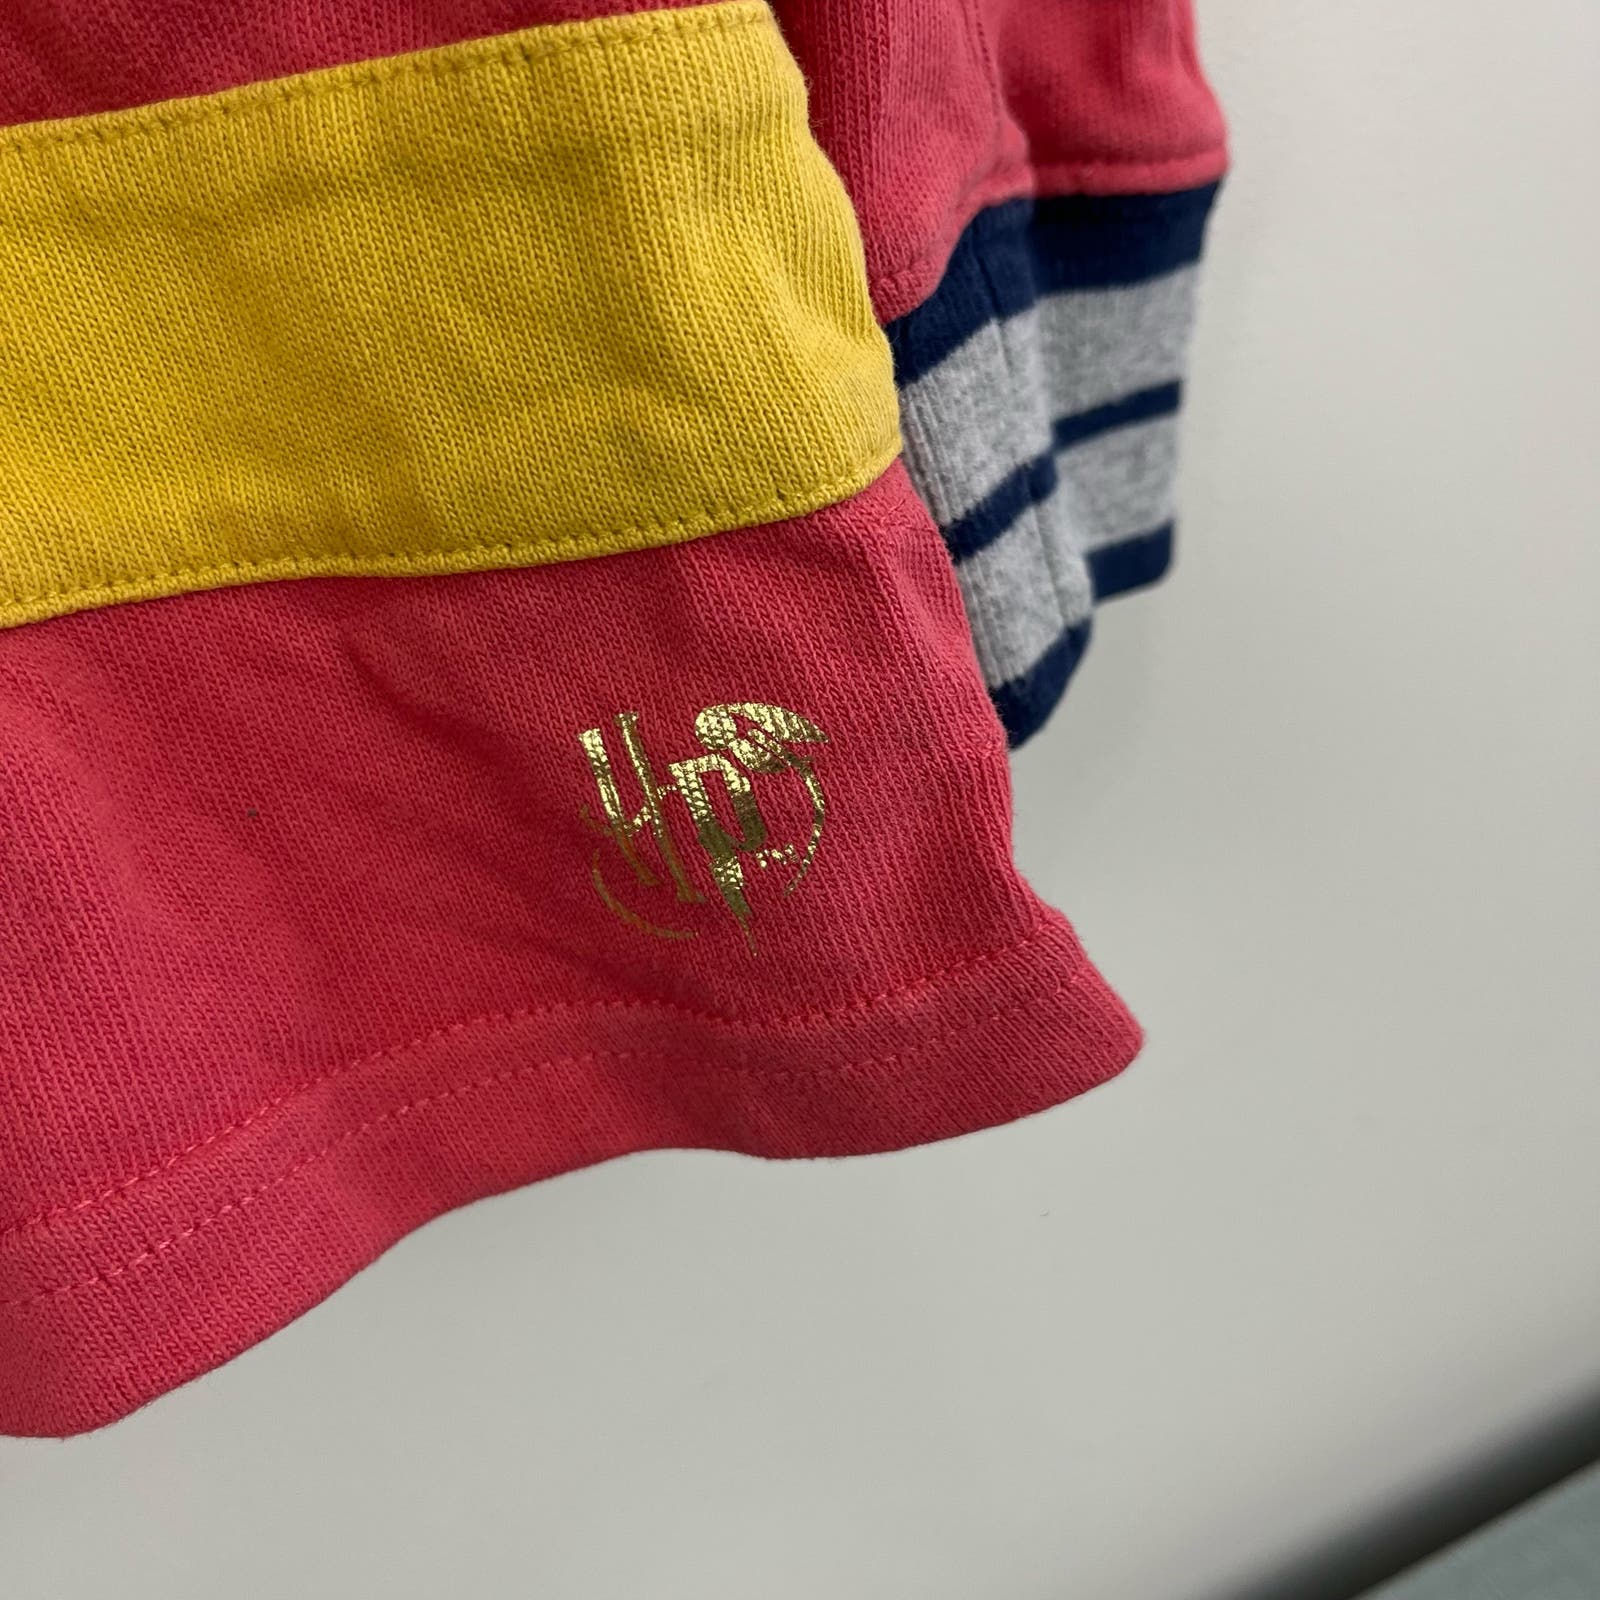 Mini Boden Hogwarts Rugby Shirt Rockabilly Red 7-8